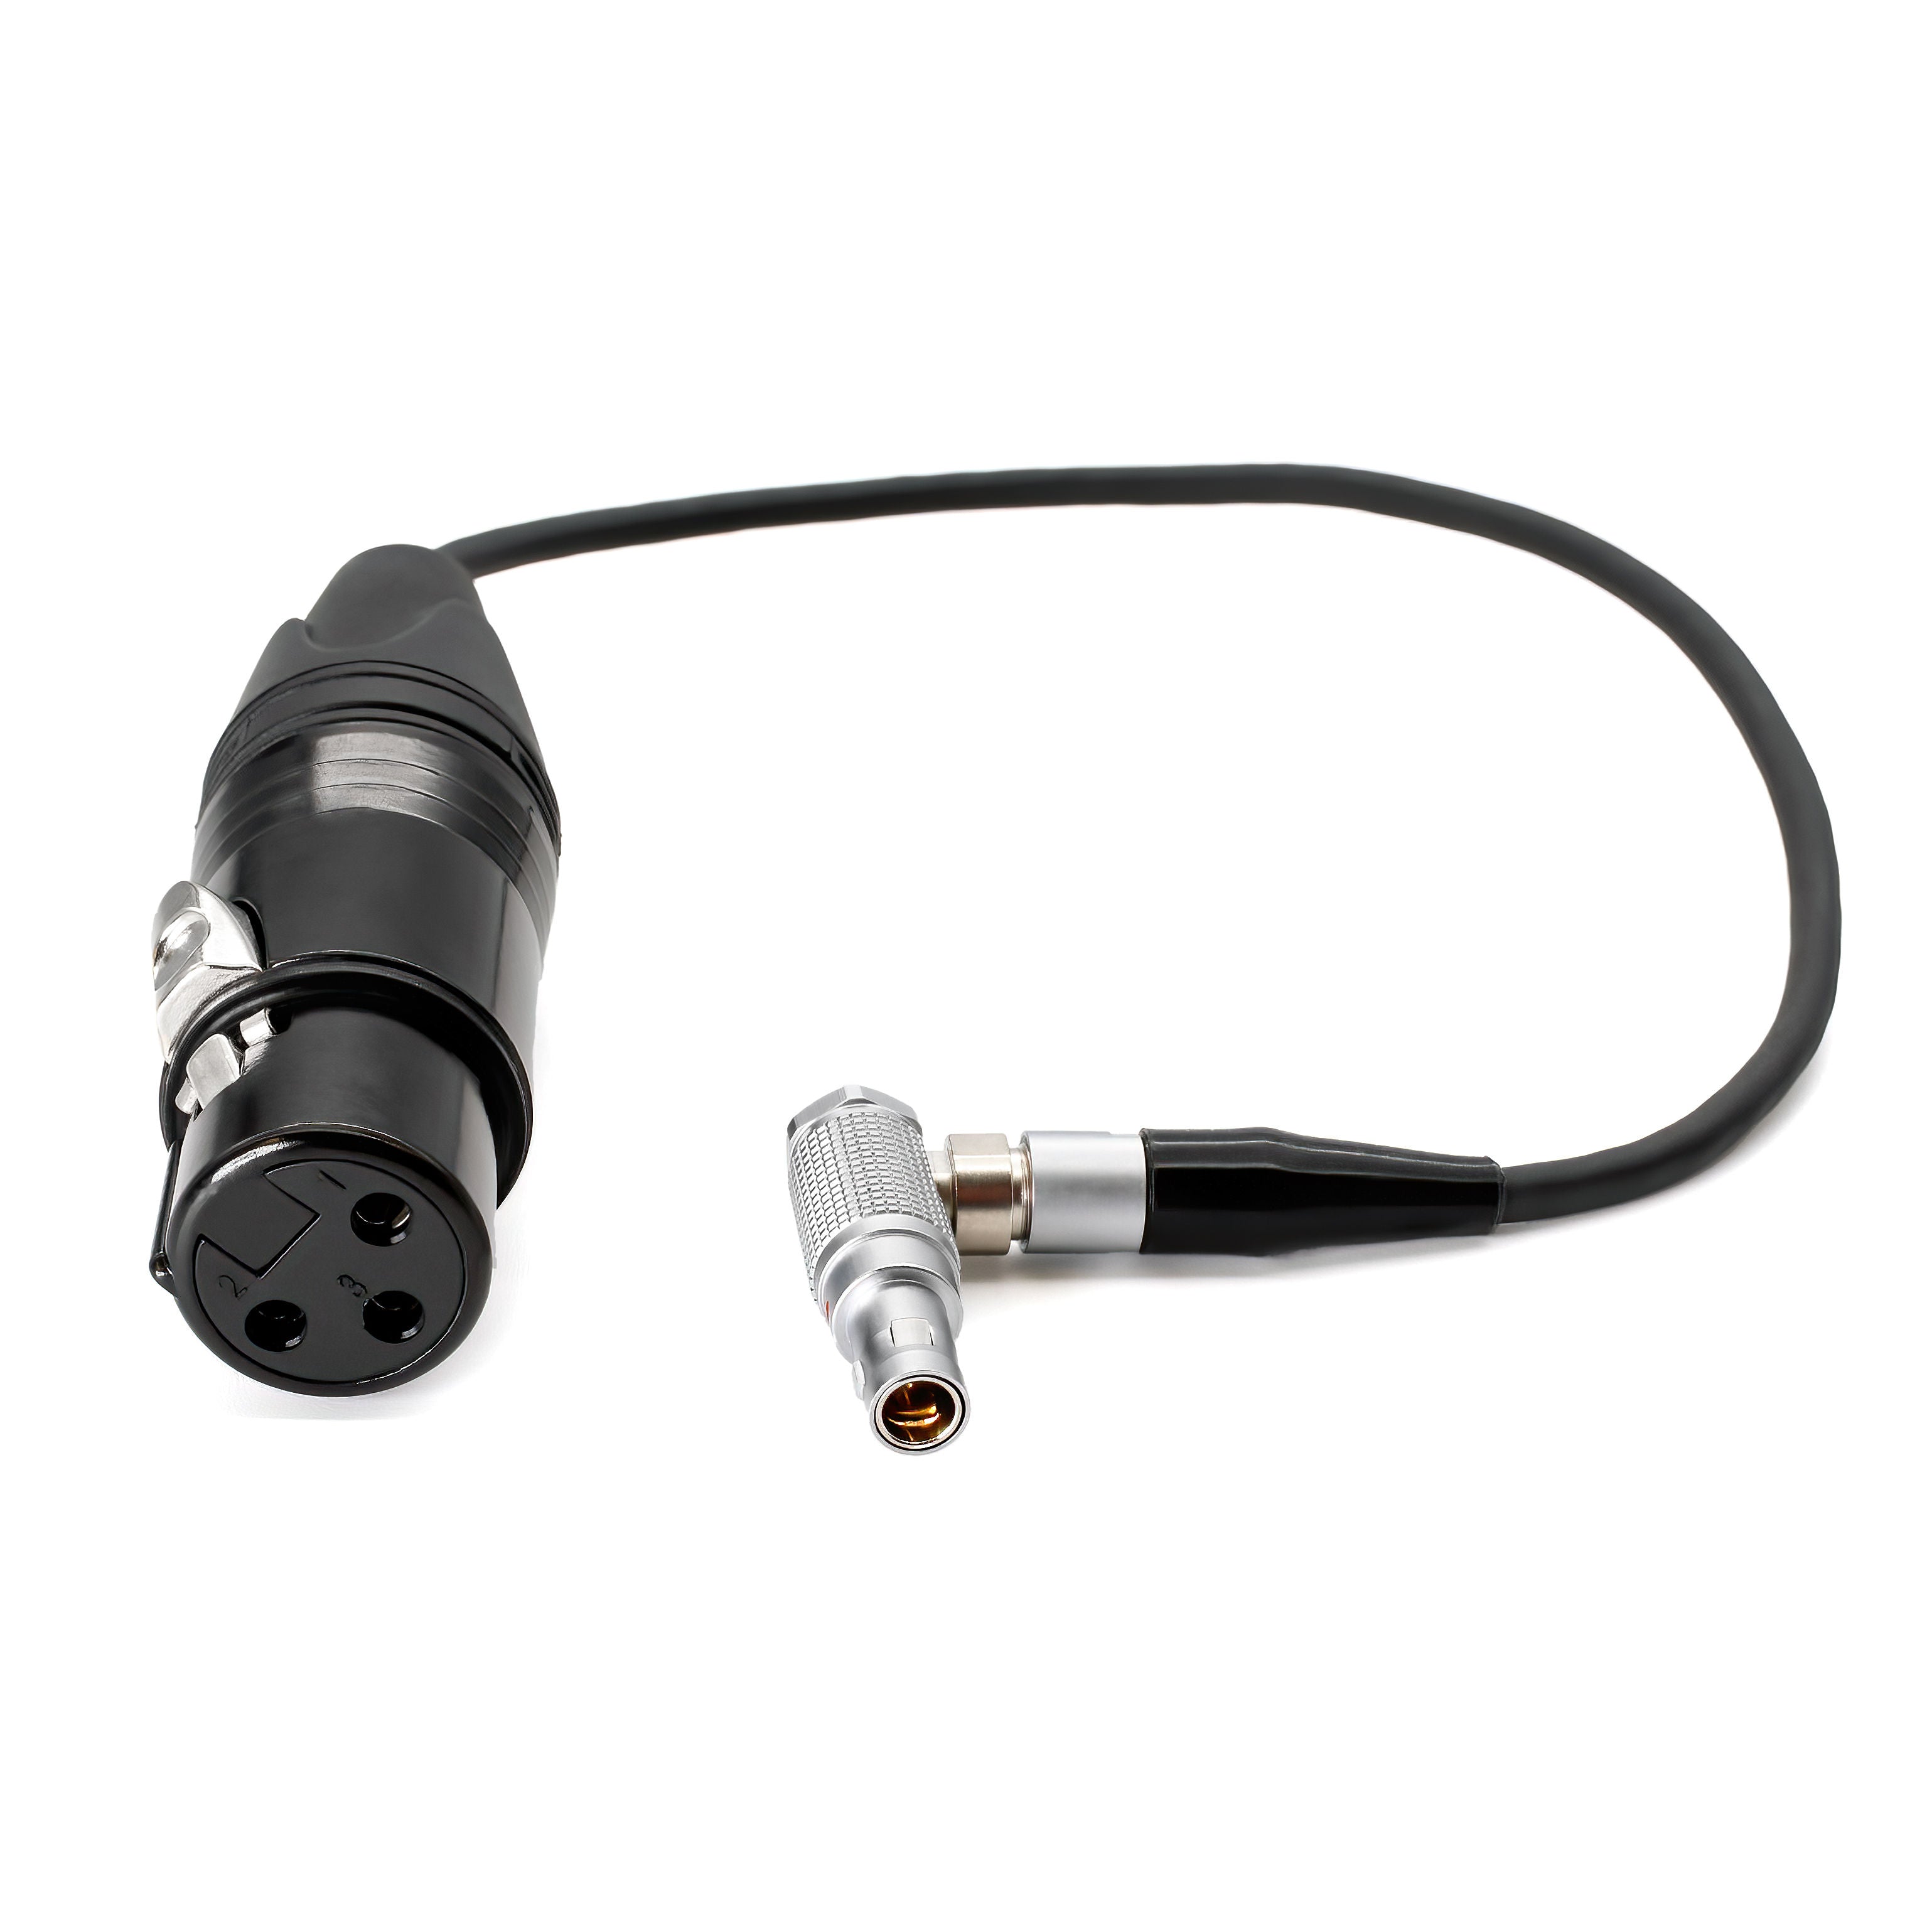 Kondor Blue 5-Pin Lemo to XLR Audio Cable for Arri Alexa and Z Cam Flagship